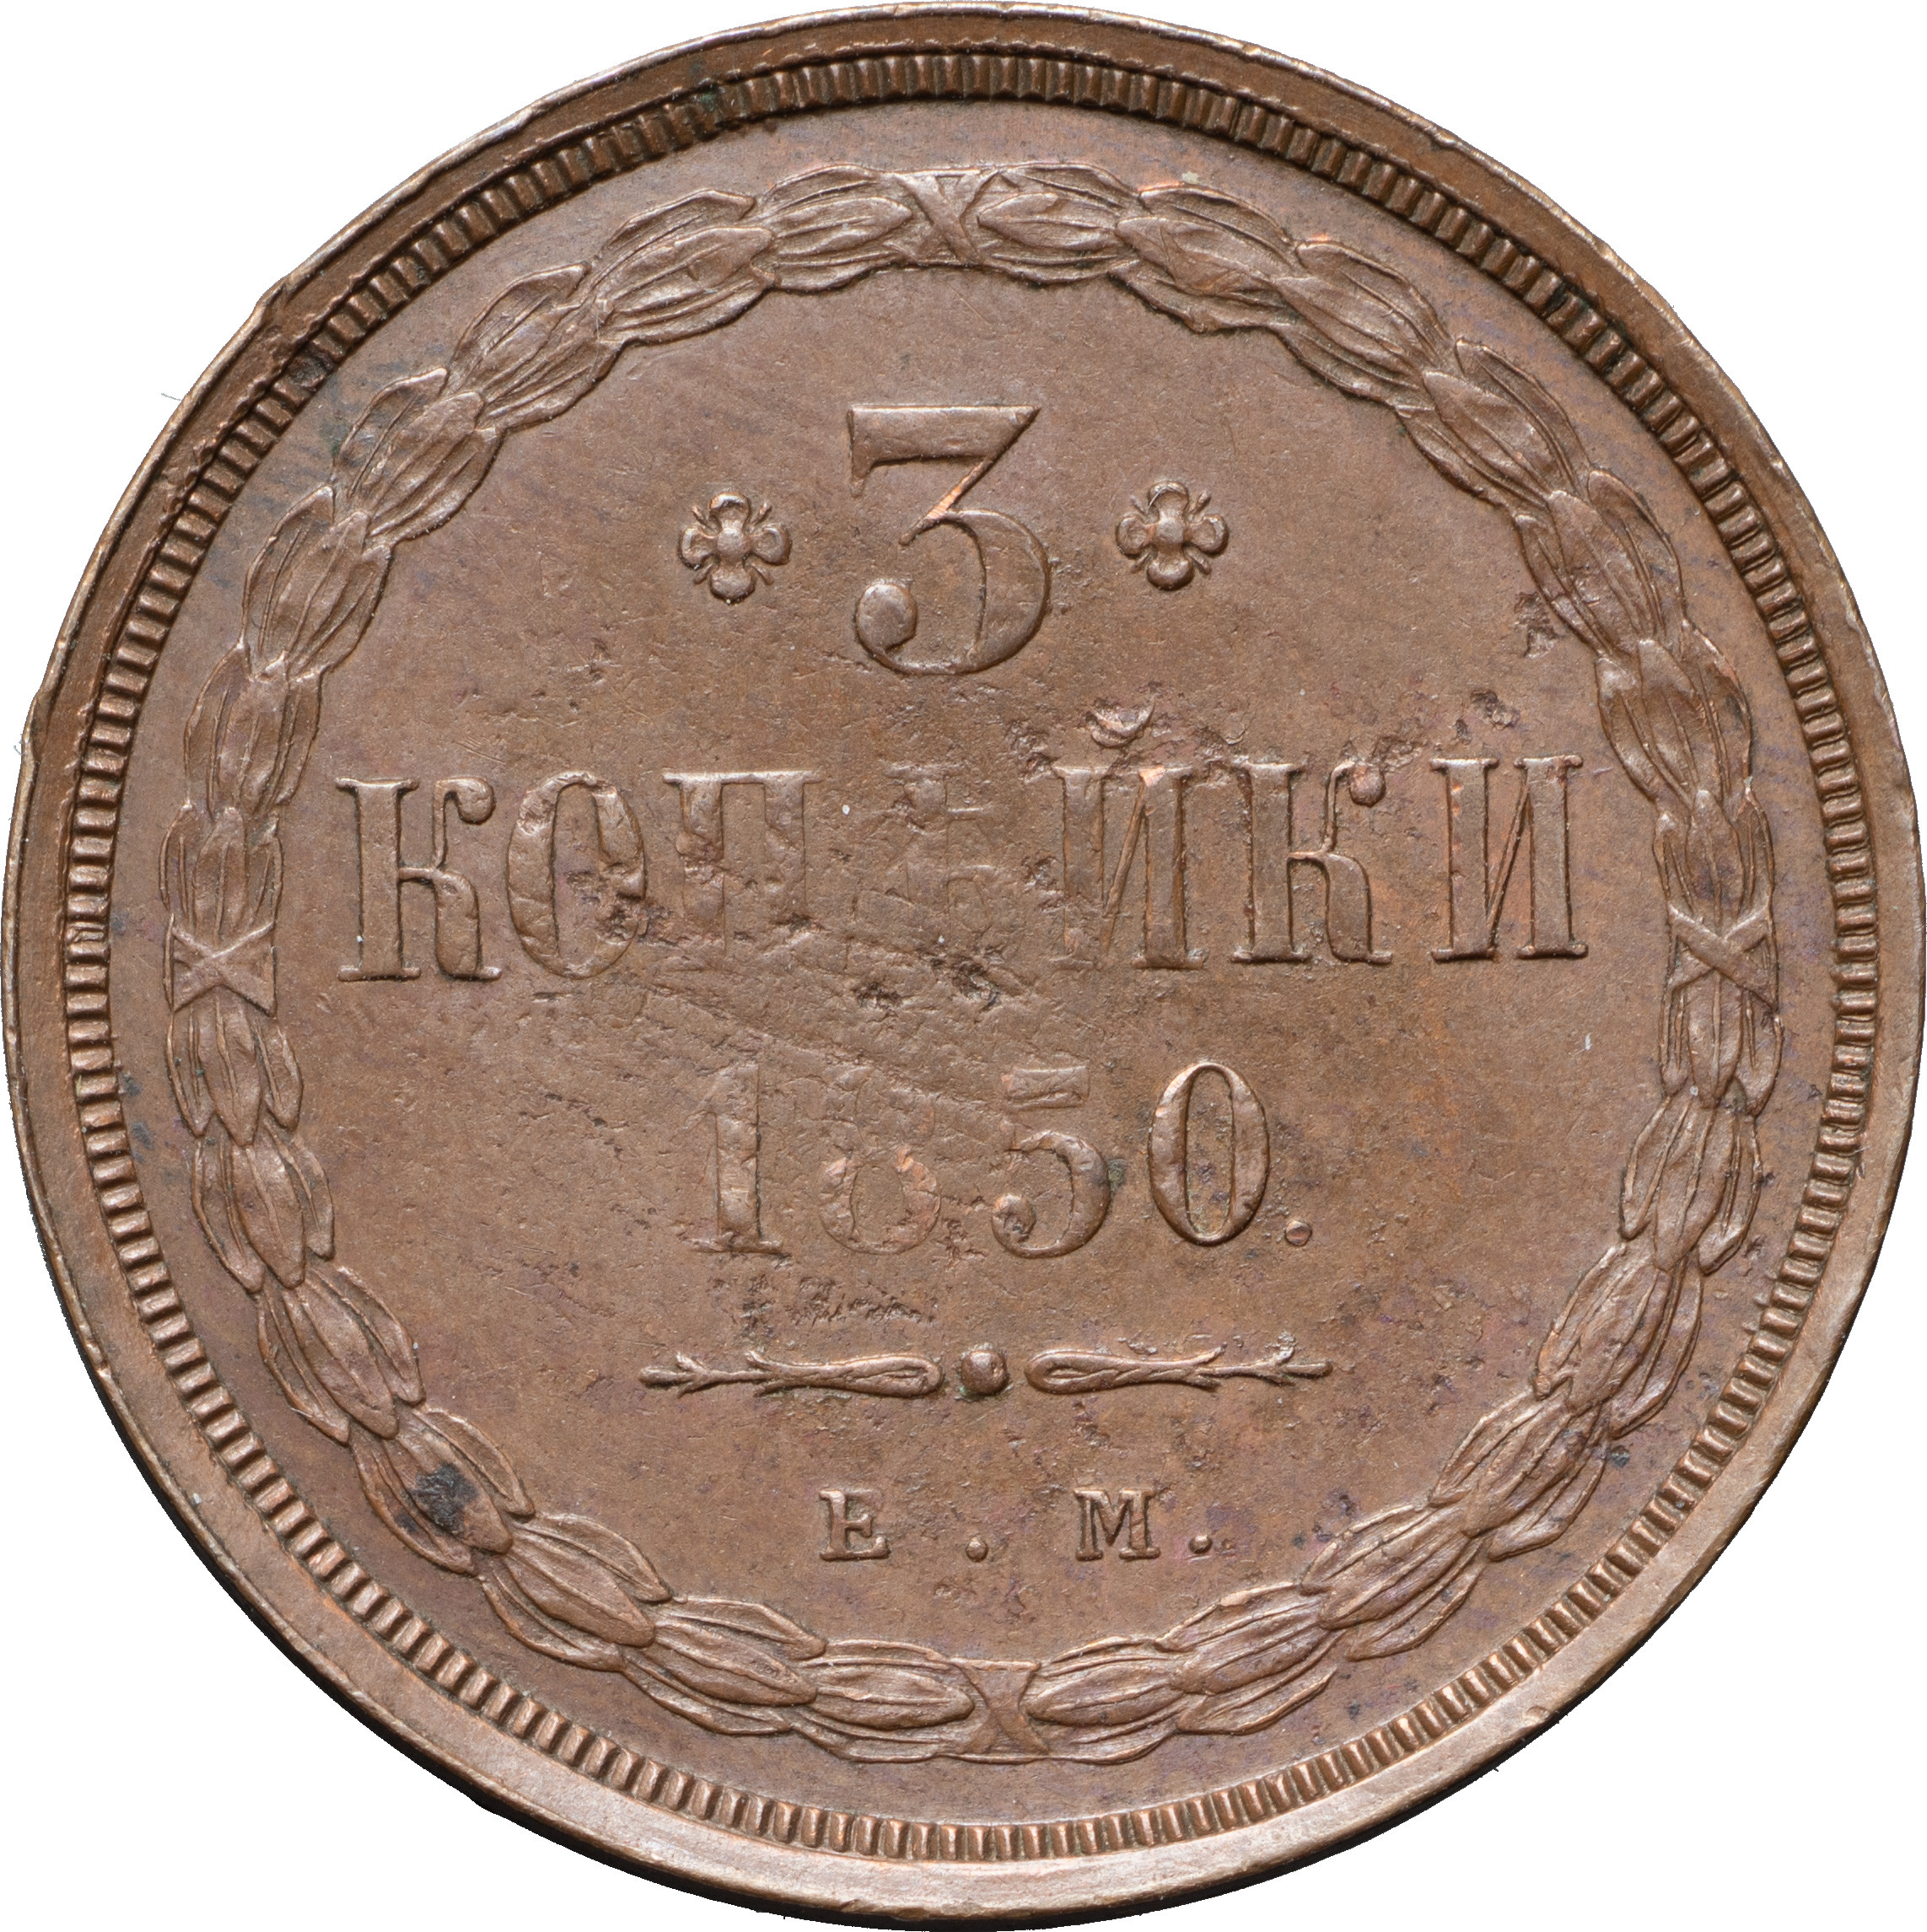 3 копейки 1850 года